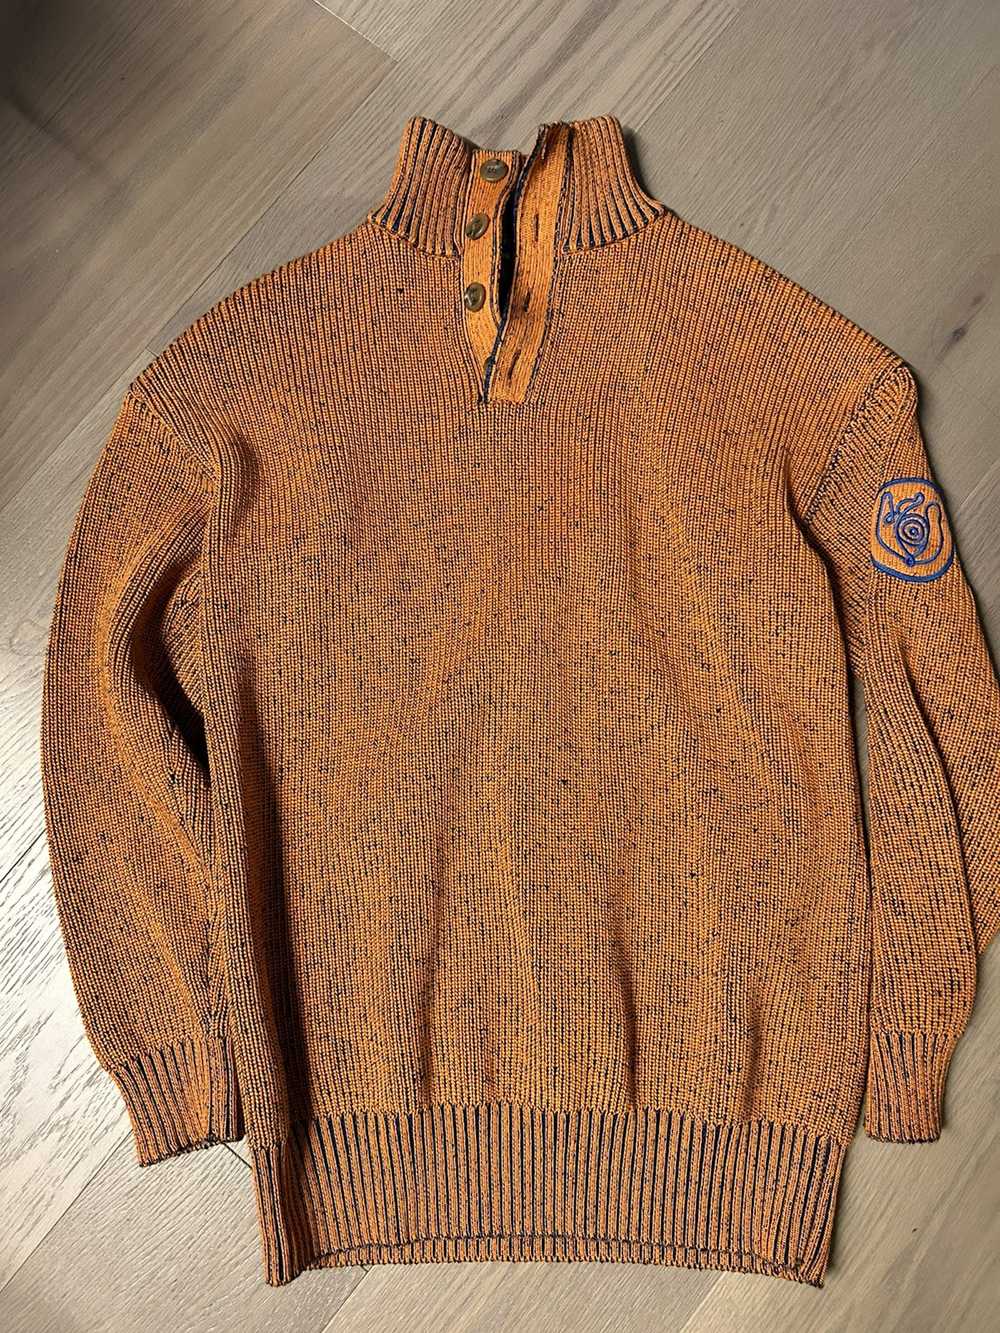 Loewe Loewe melange patch sweater - image 1